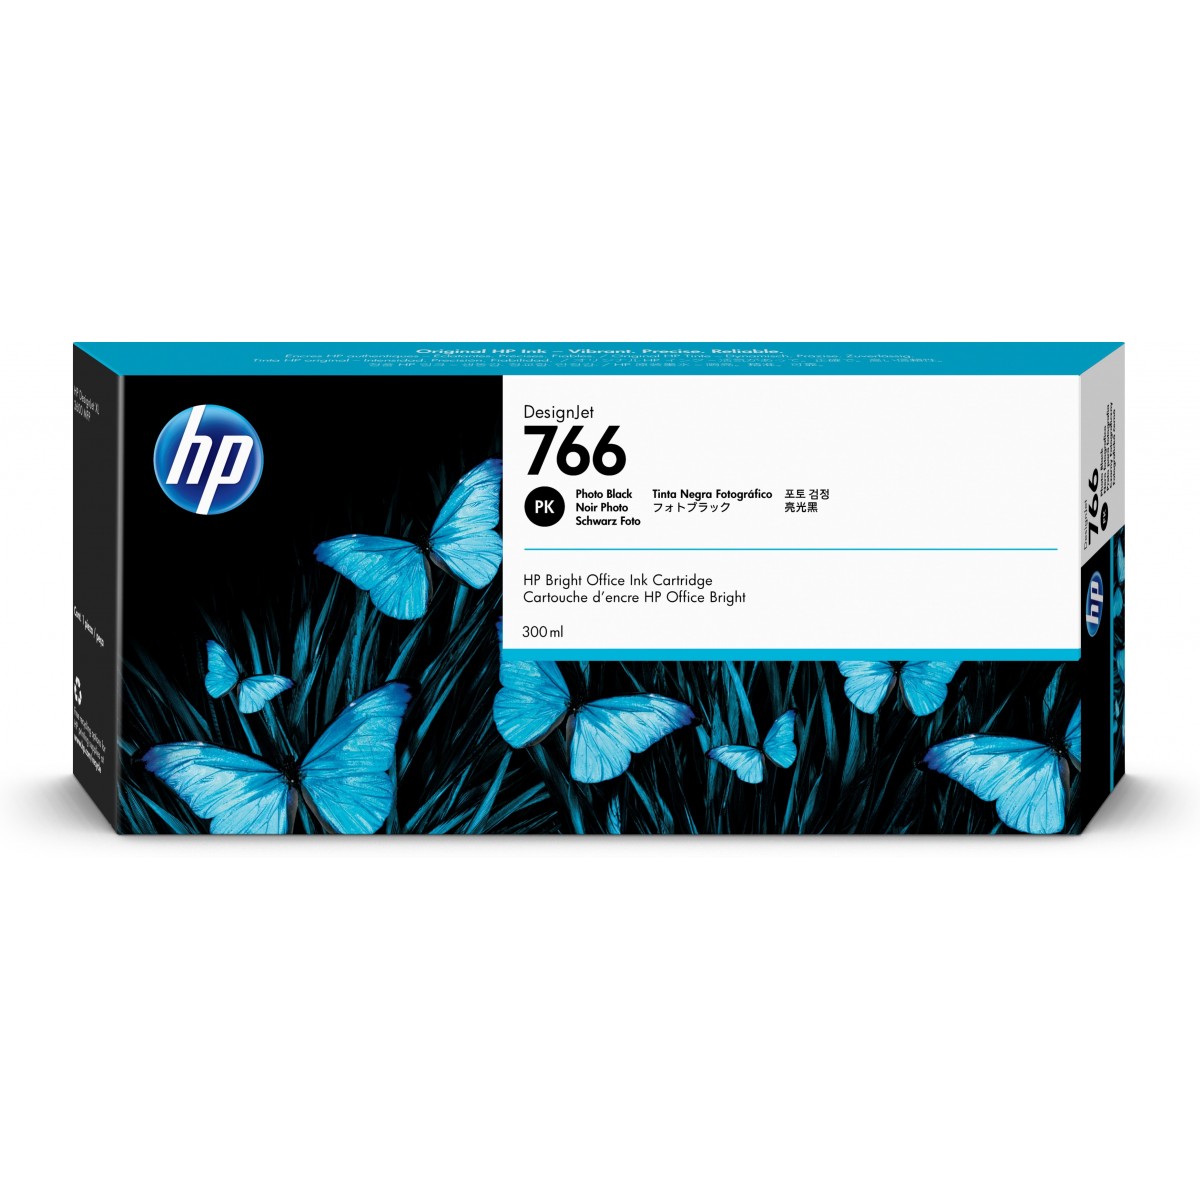 HP 766 - Original - Dye-based ink - Photo black - HP - HP DesignJet XL 3600 - 1 pc(s)